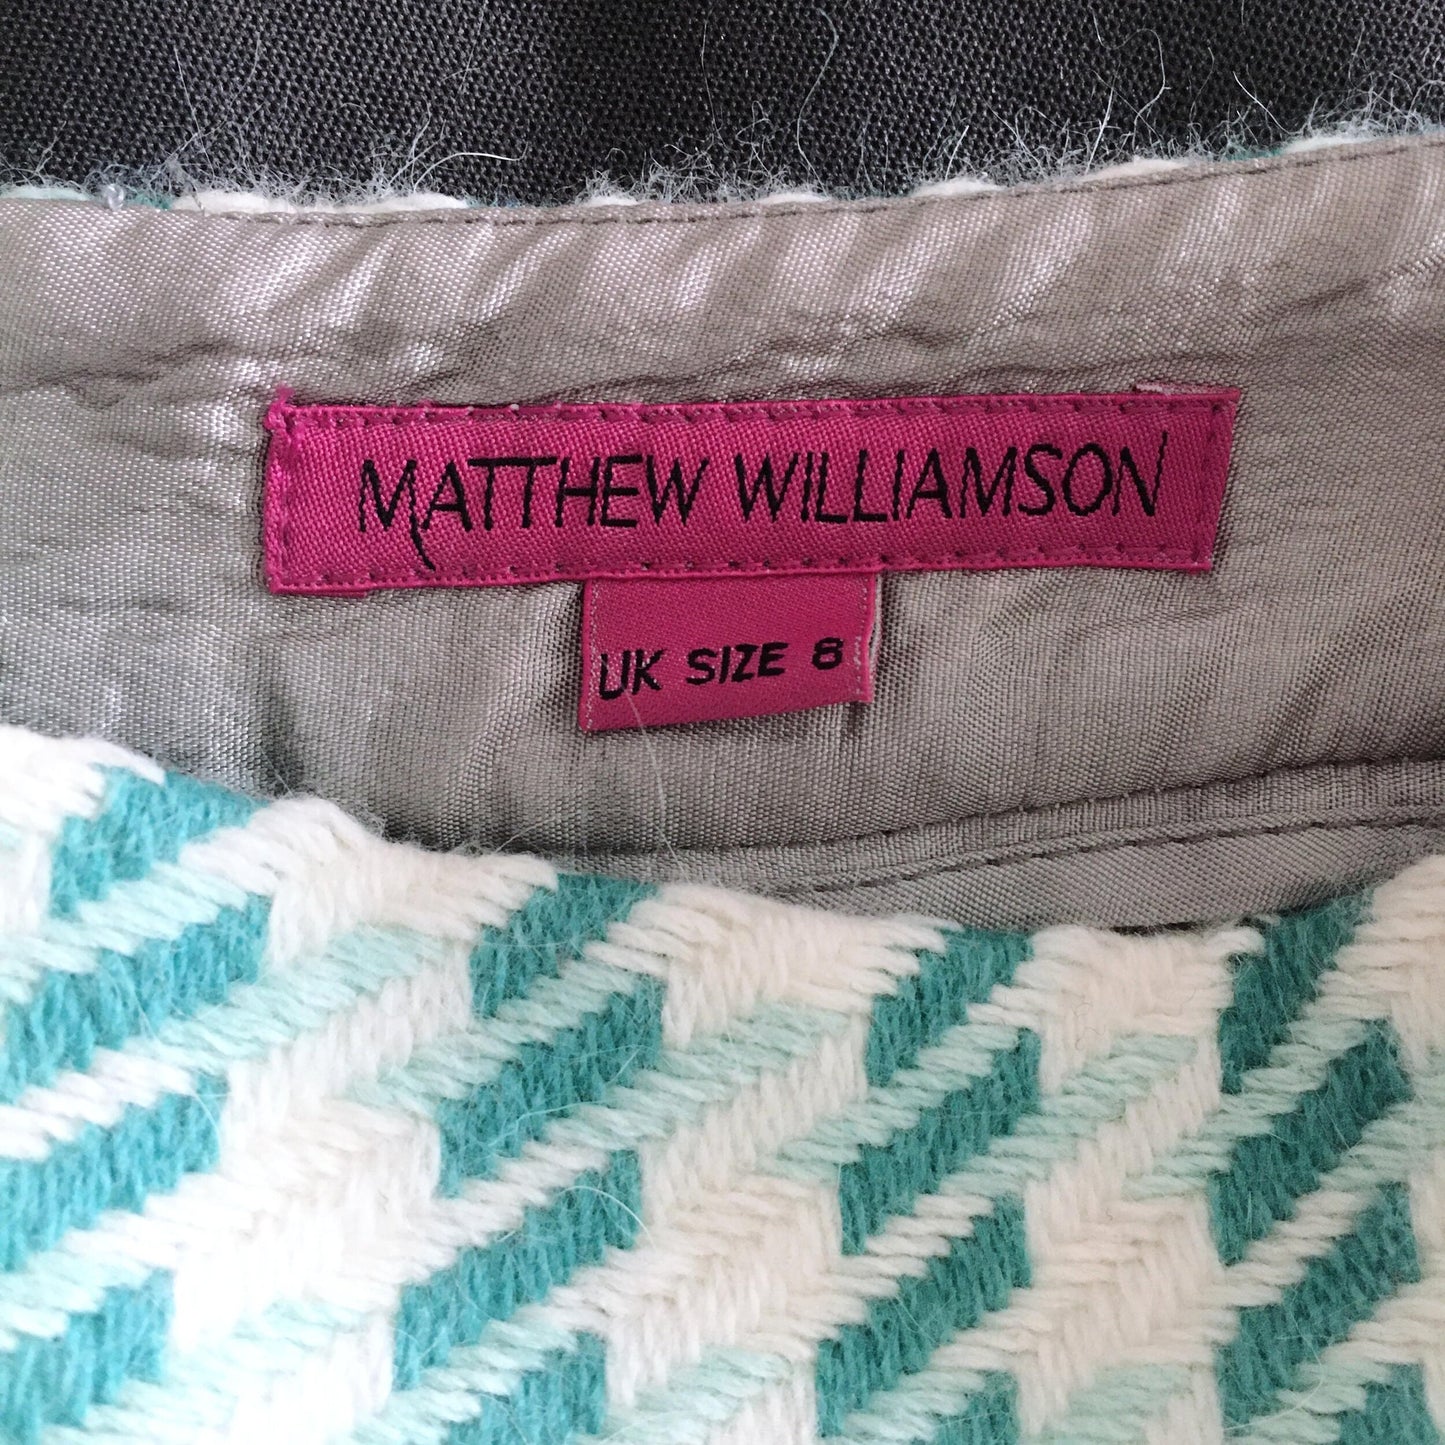 matthew williamson houndstooth midi skirt - size 8